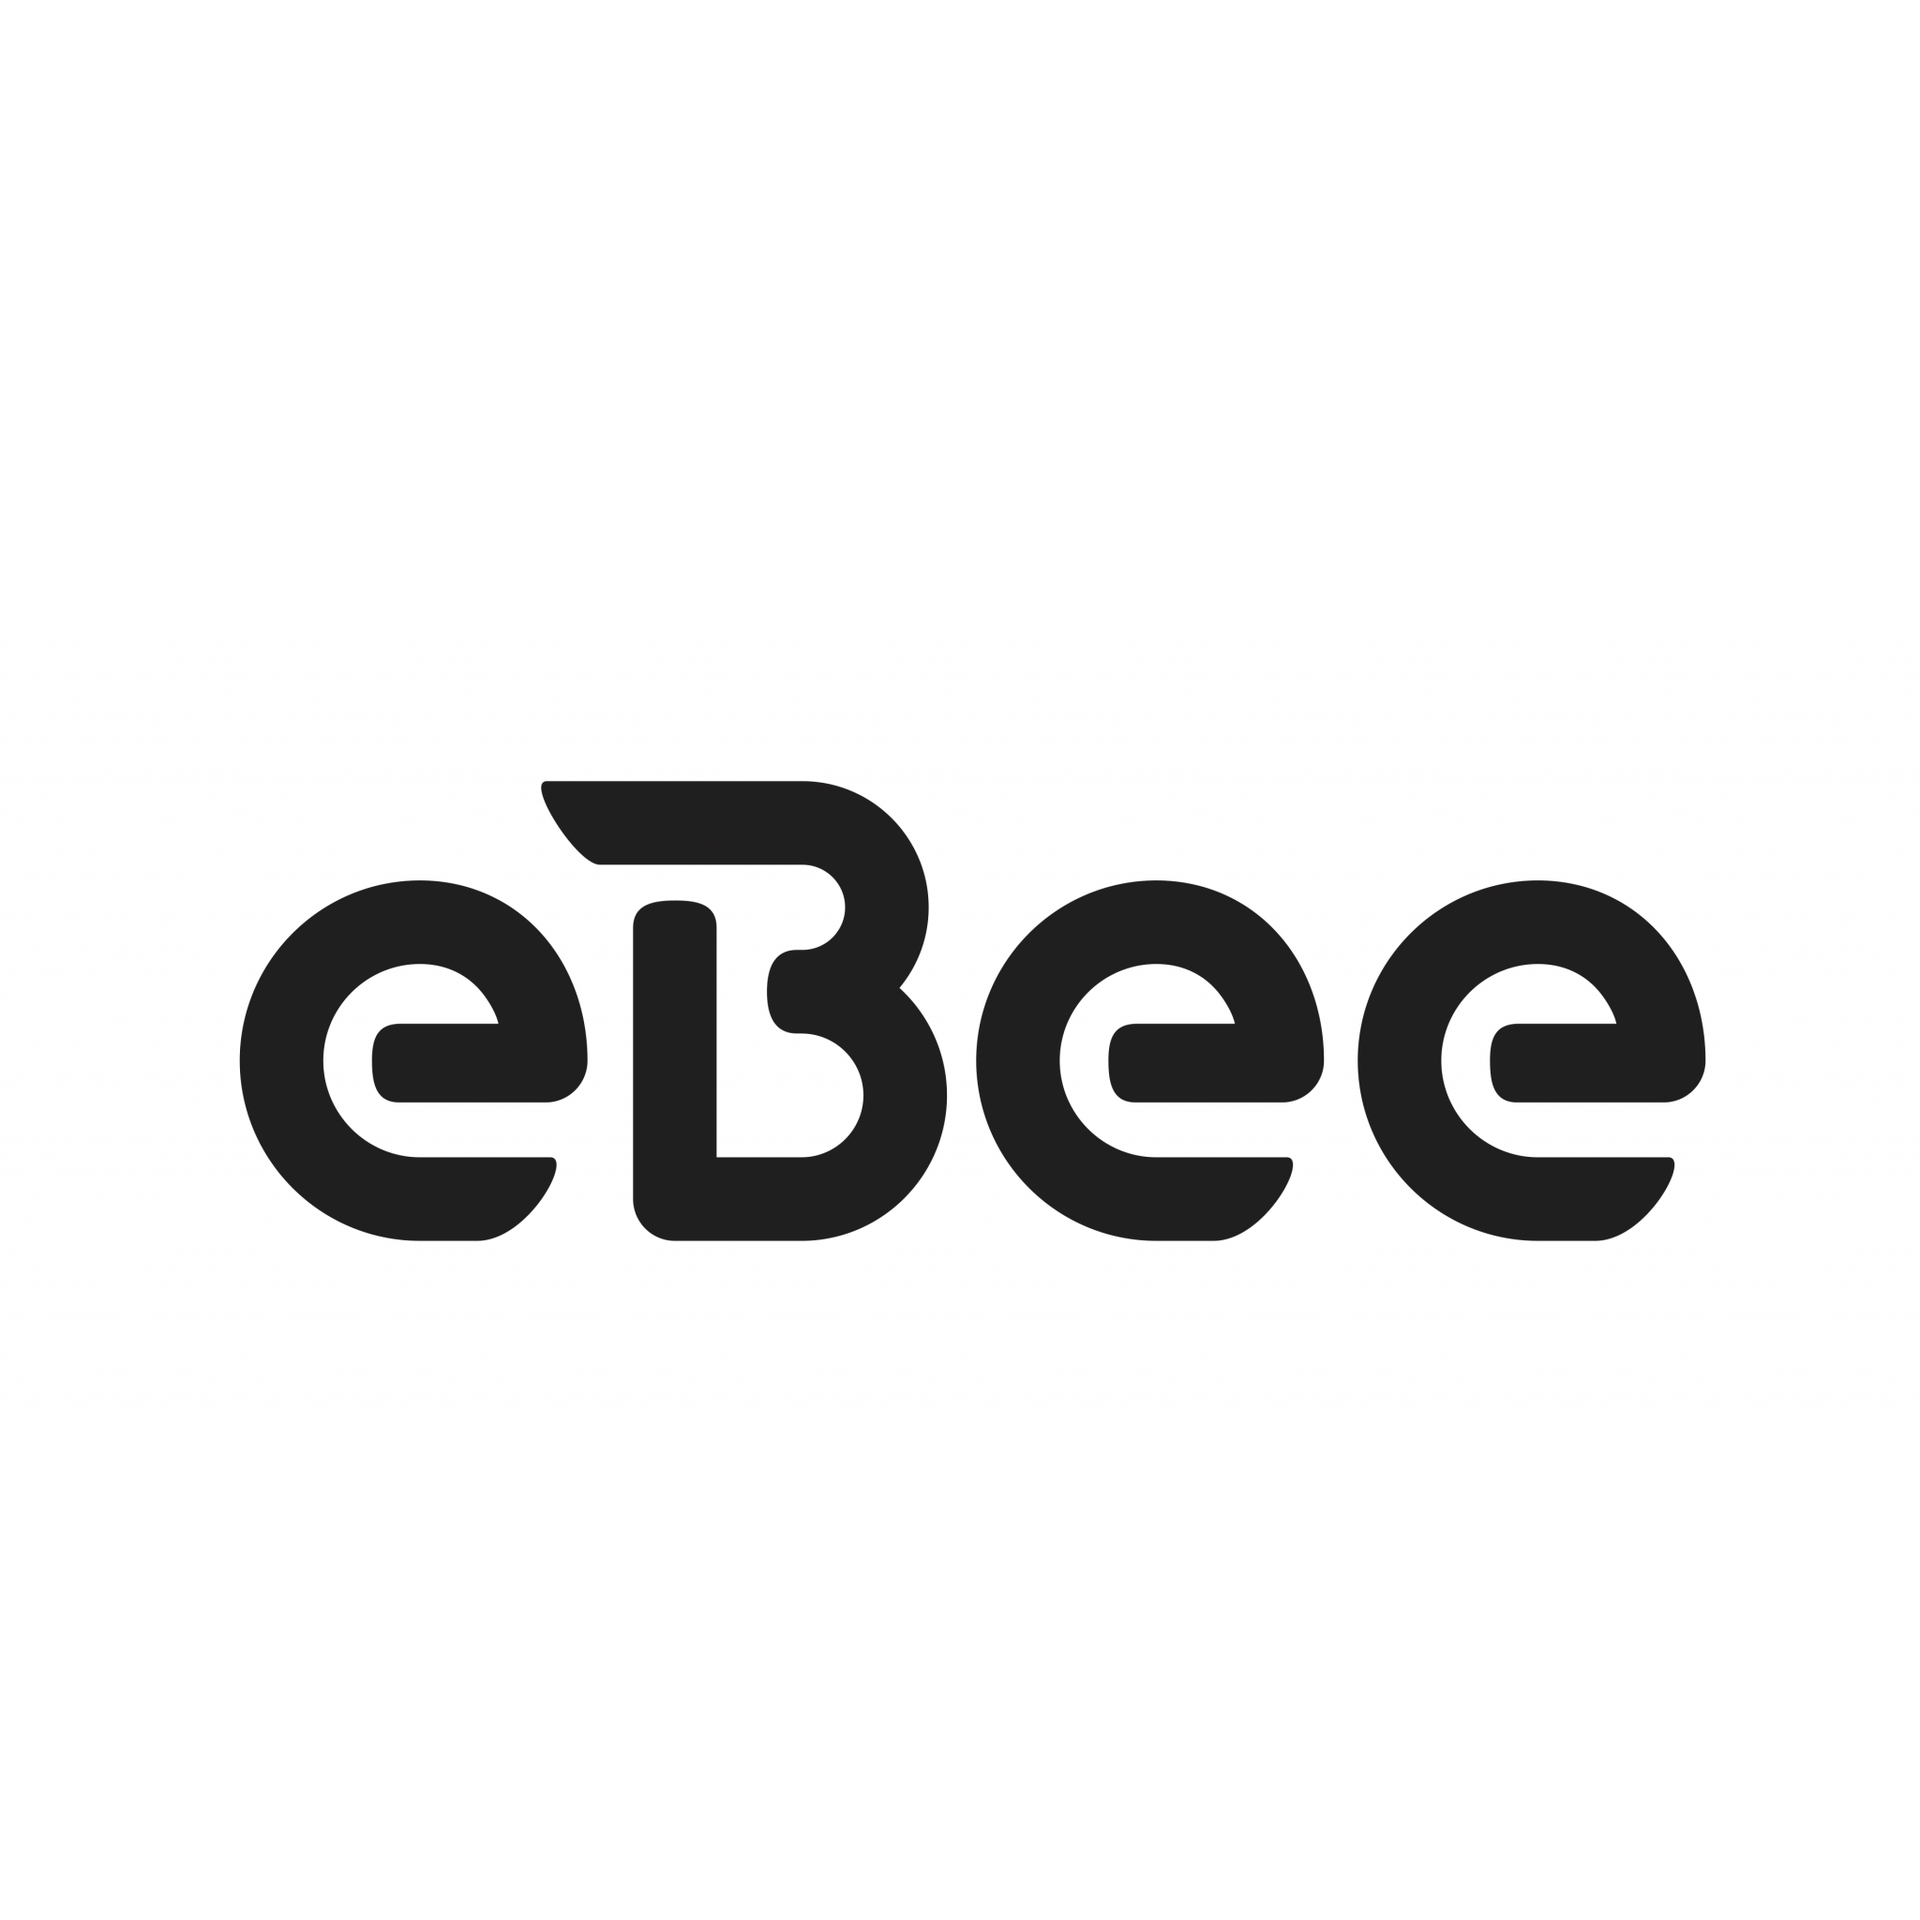 eBee Kenya Ltd